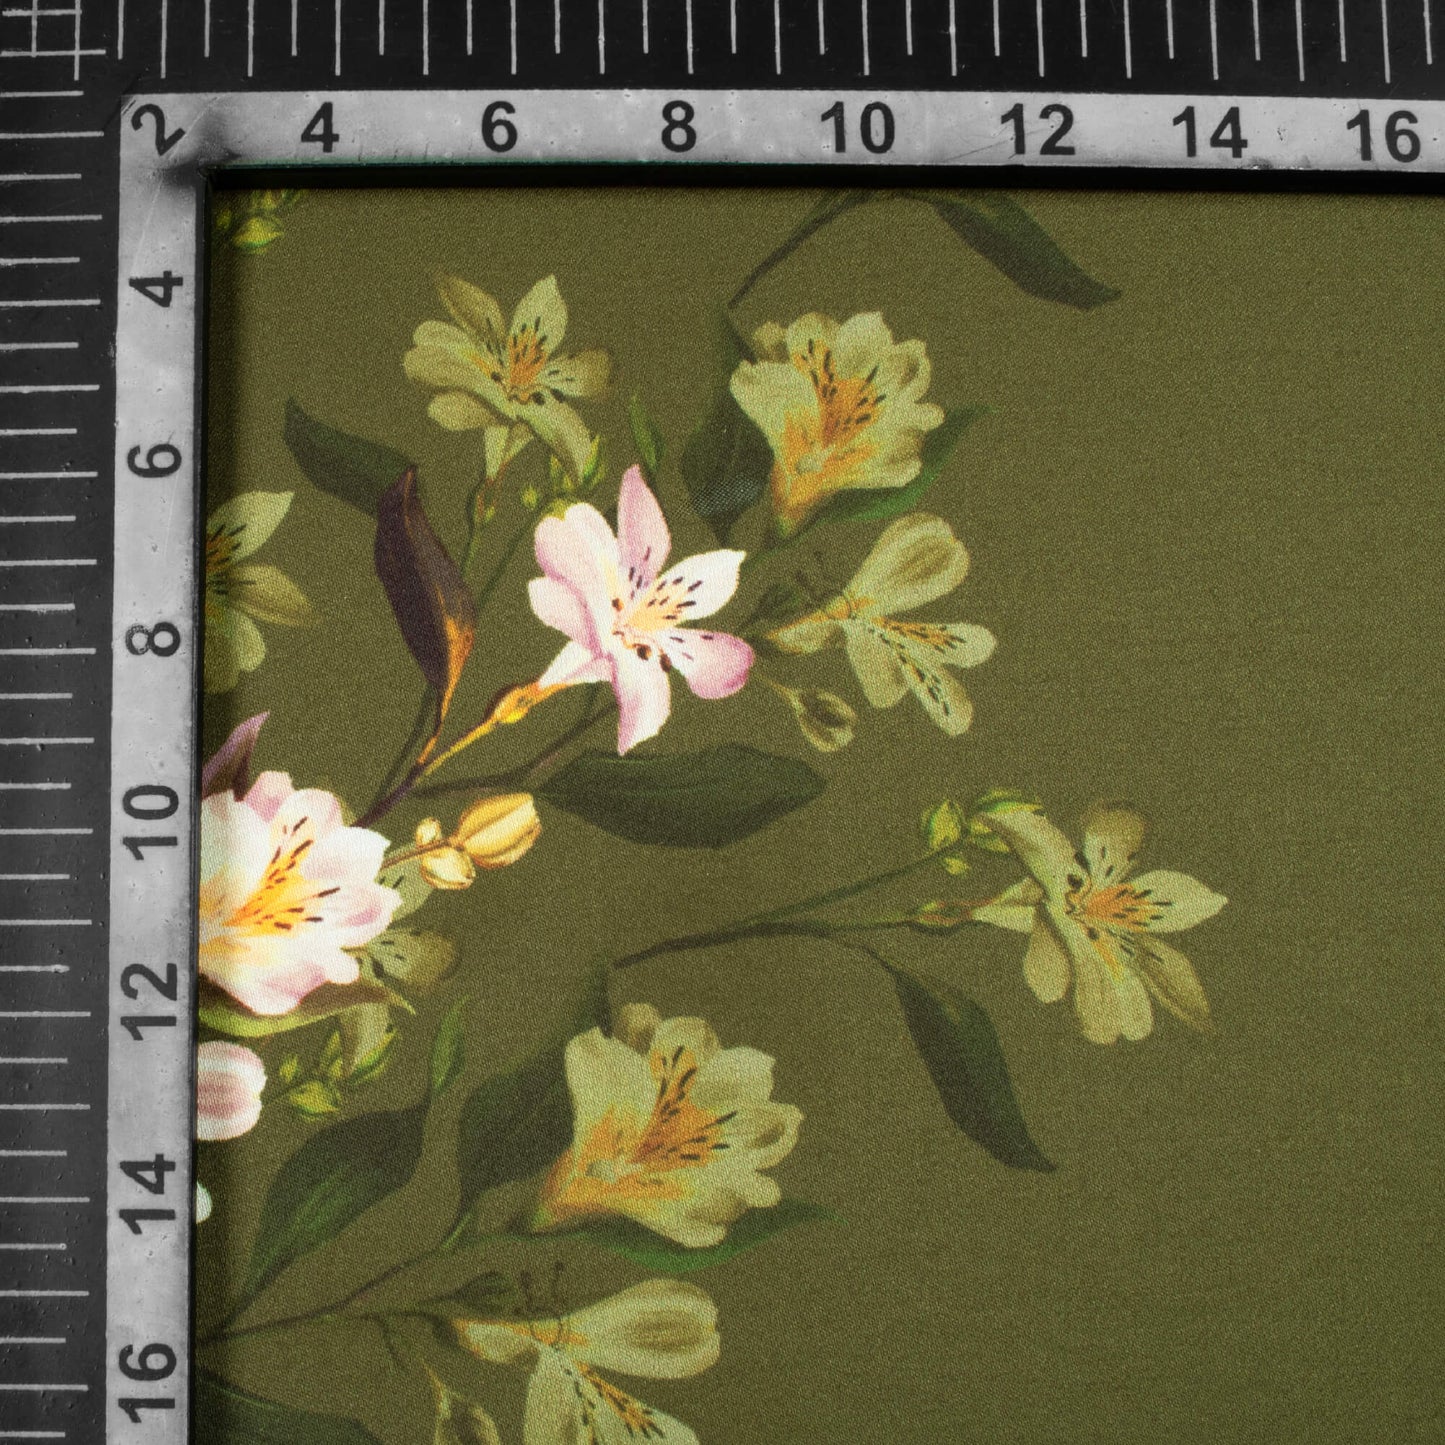 Army Green And White Floral Pattern Digital Print Premium Lush Satin Fabric